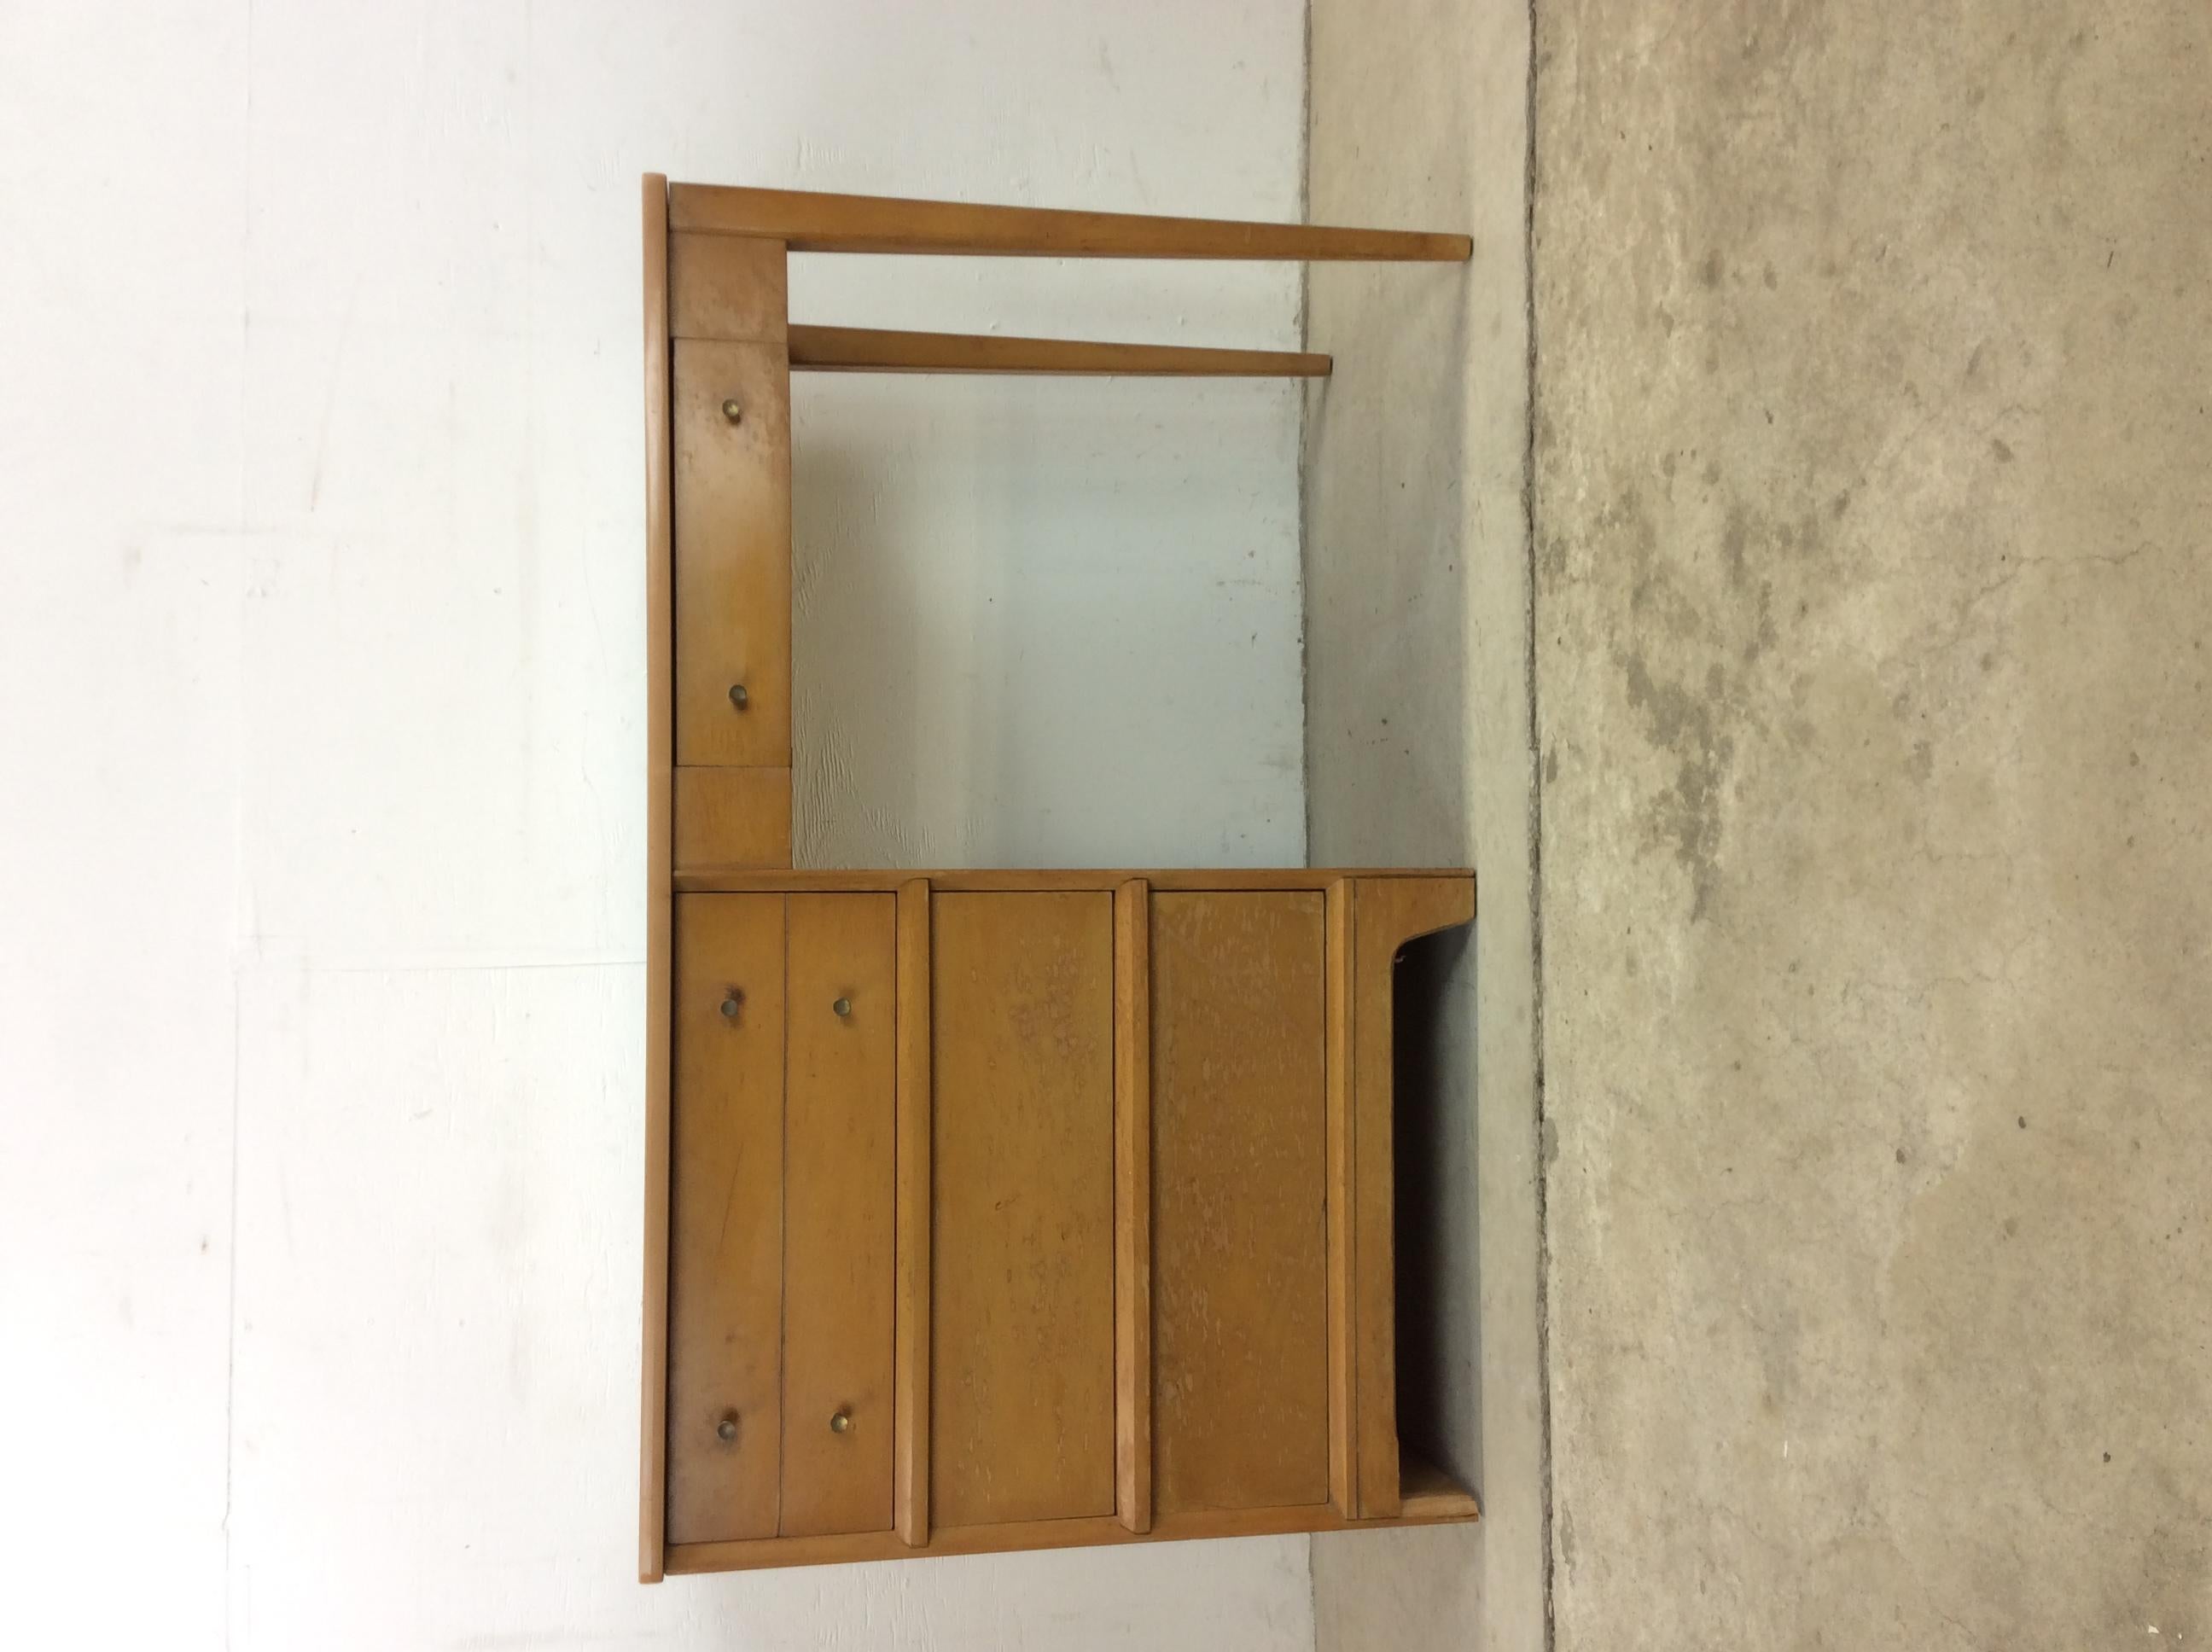 Américain Bureau à 4 tiroirs moderne du milieu du siècle dernier par Baumritter en vente